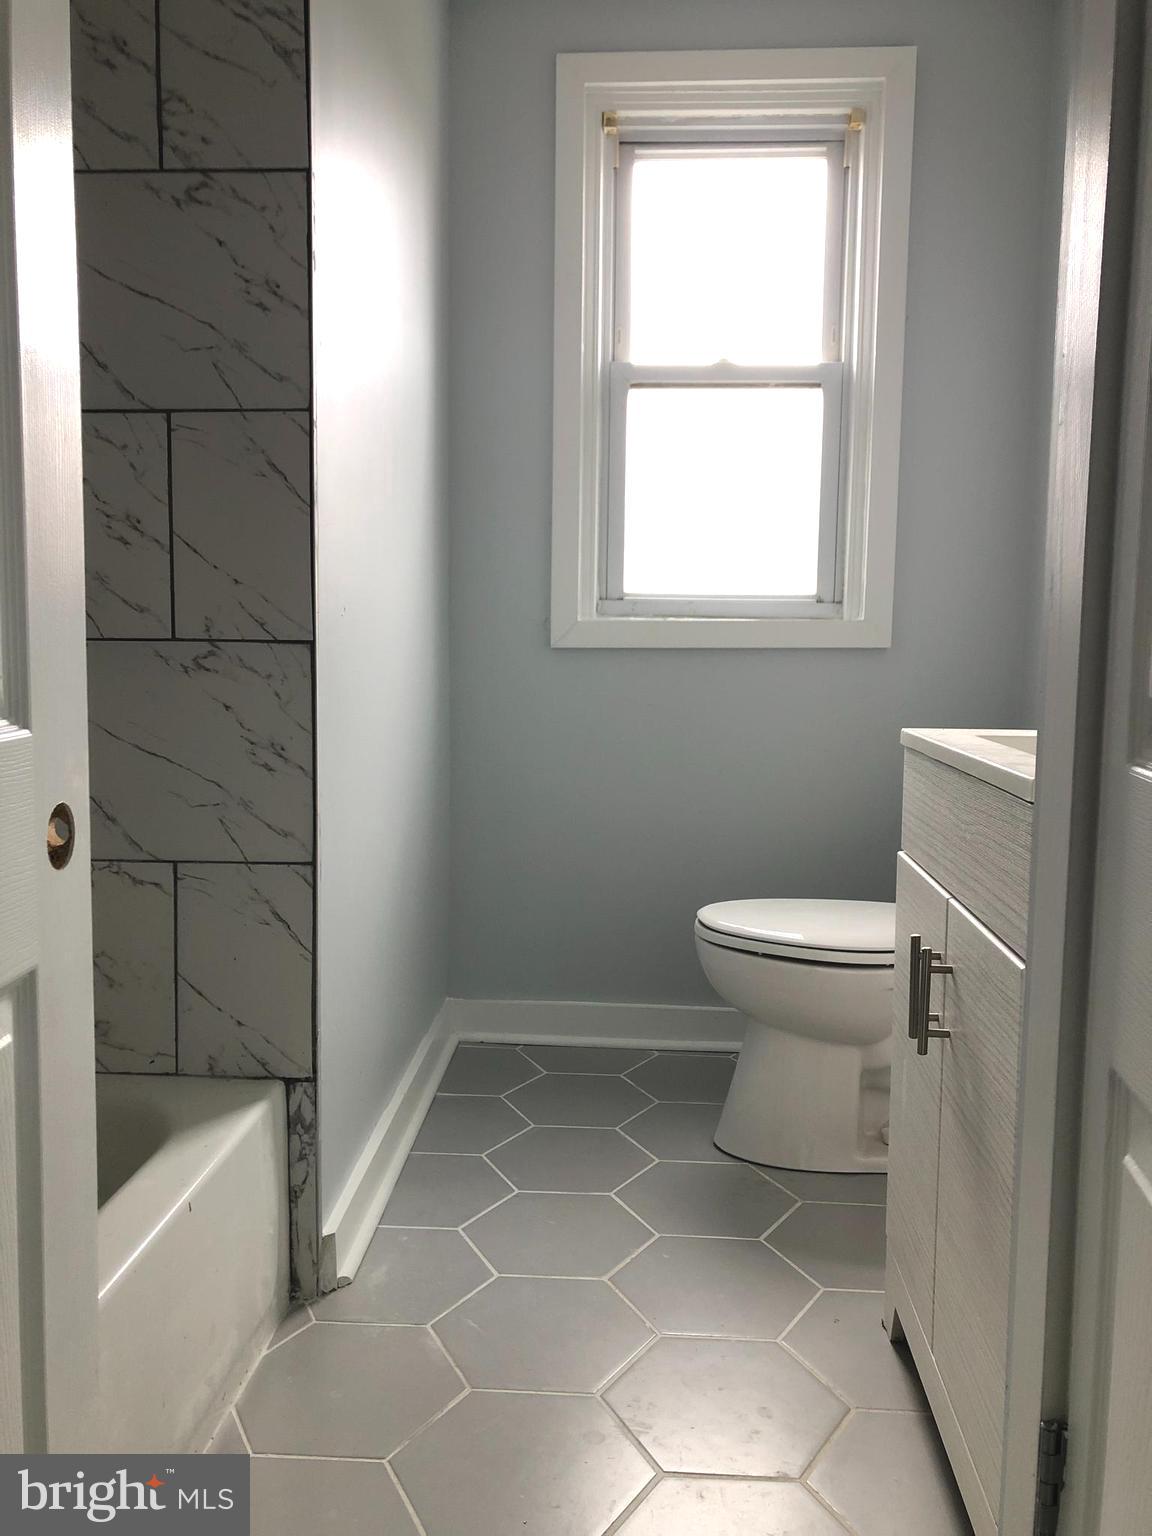 a bathroom with a toilet a sink and bathtub